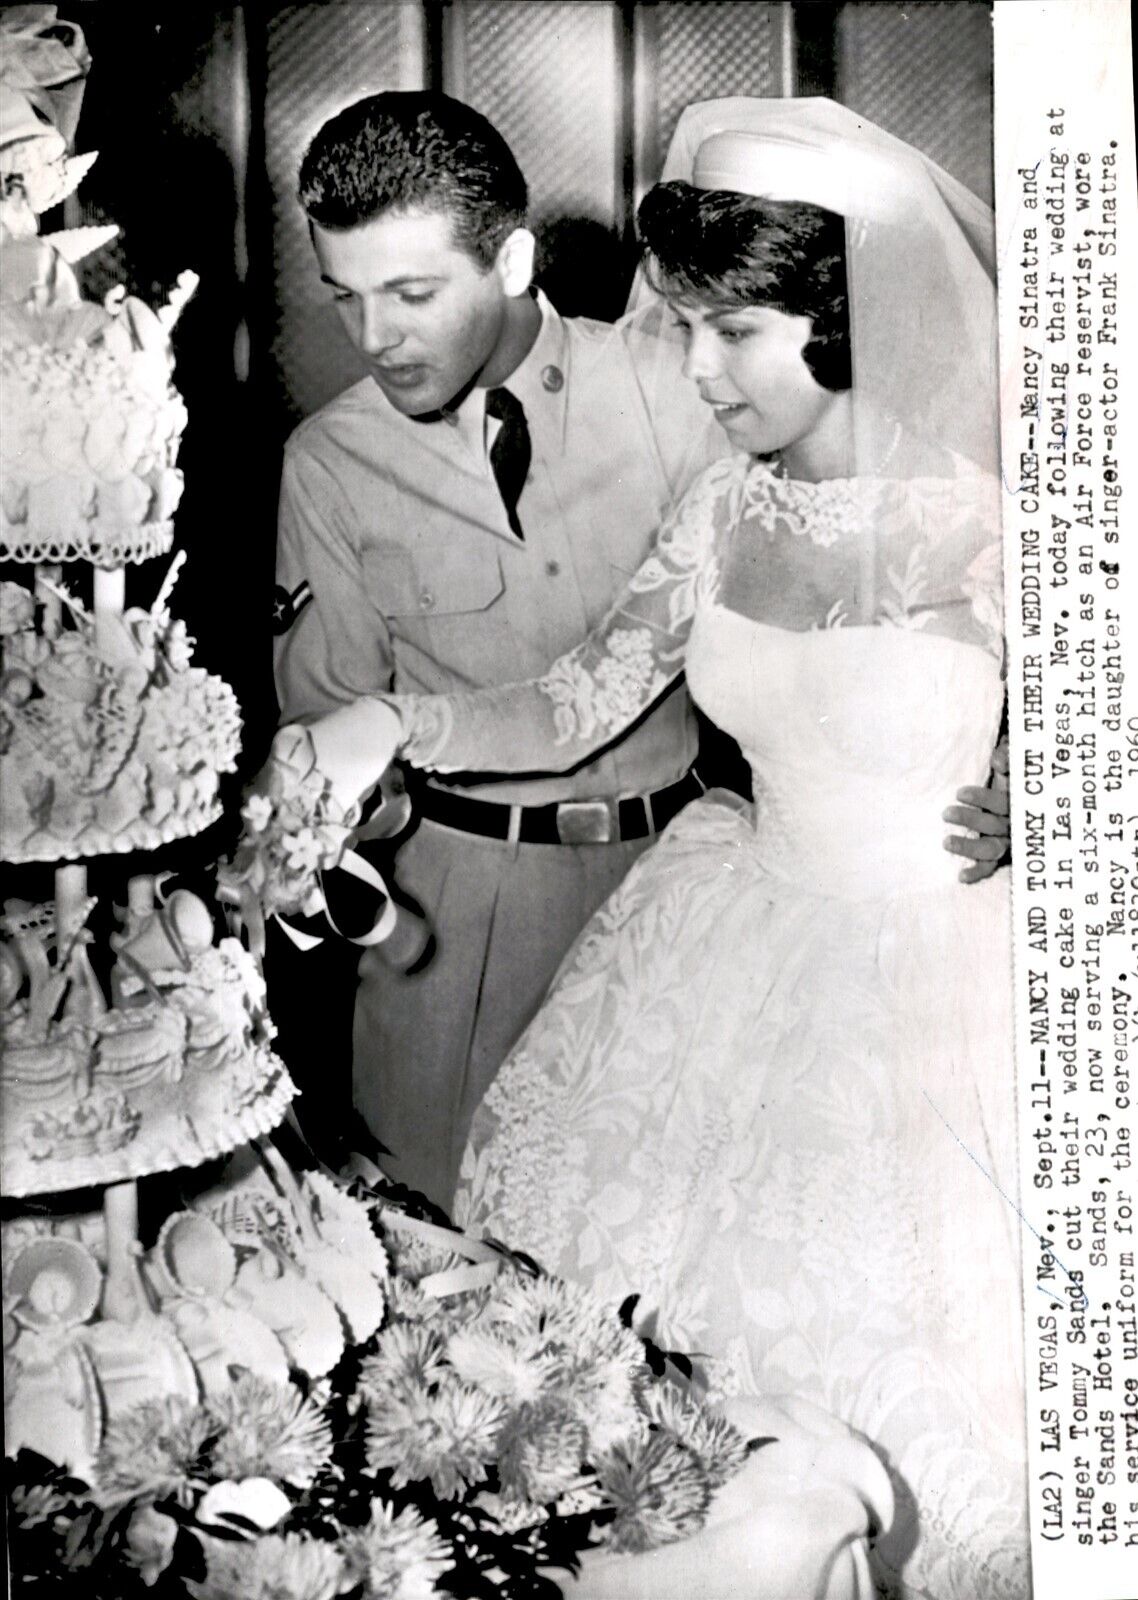 LG9 1960 AP Wire Photo NANCY SINATRA & TOMMY SANDS CUT WEDDING CAKE LAS VEGAS